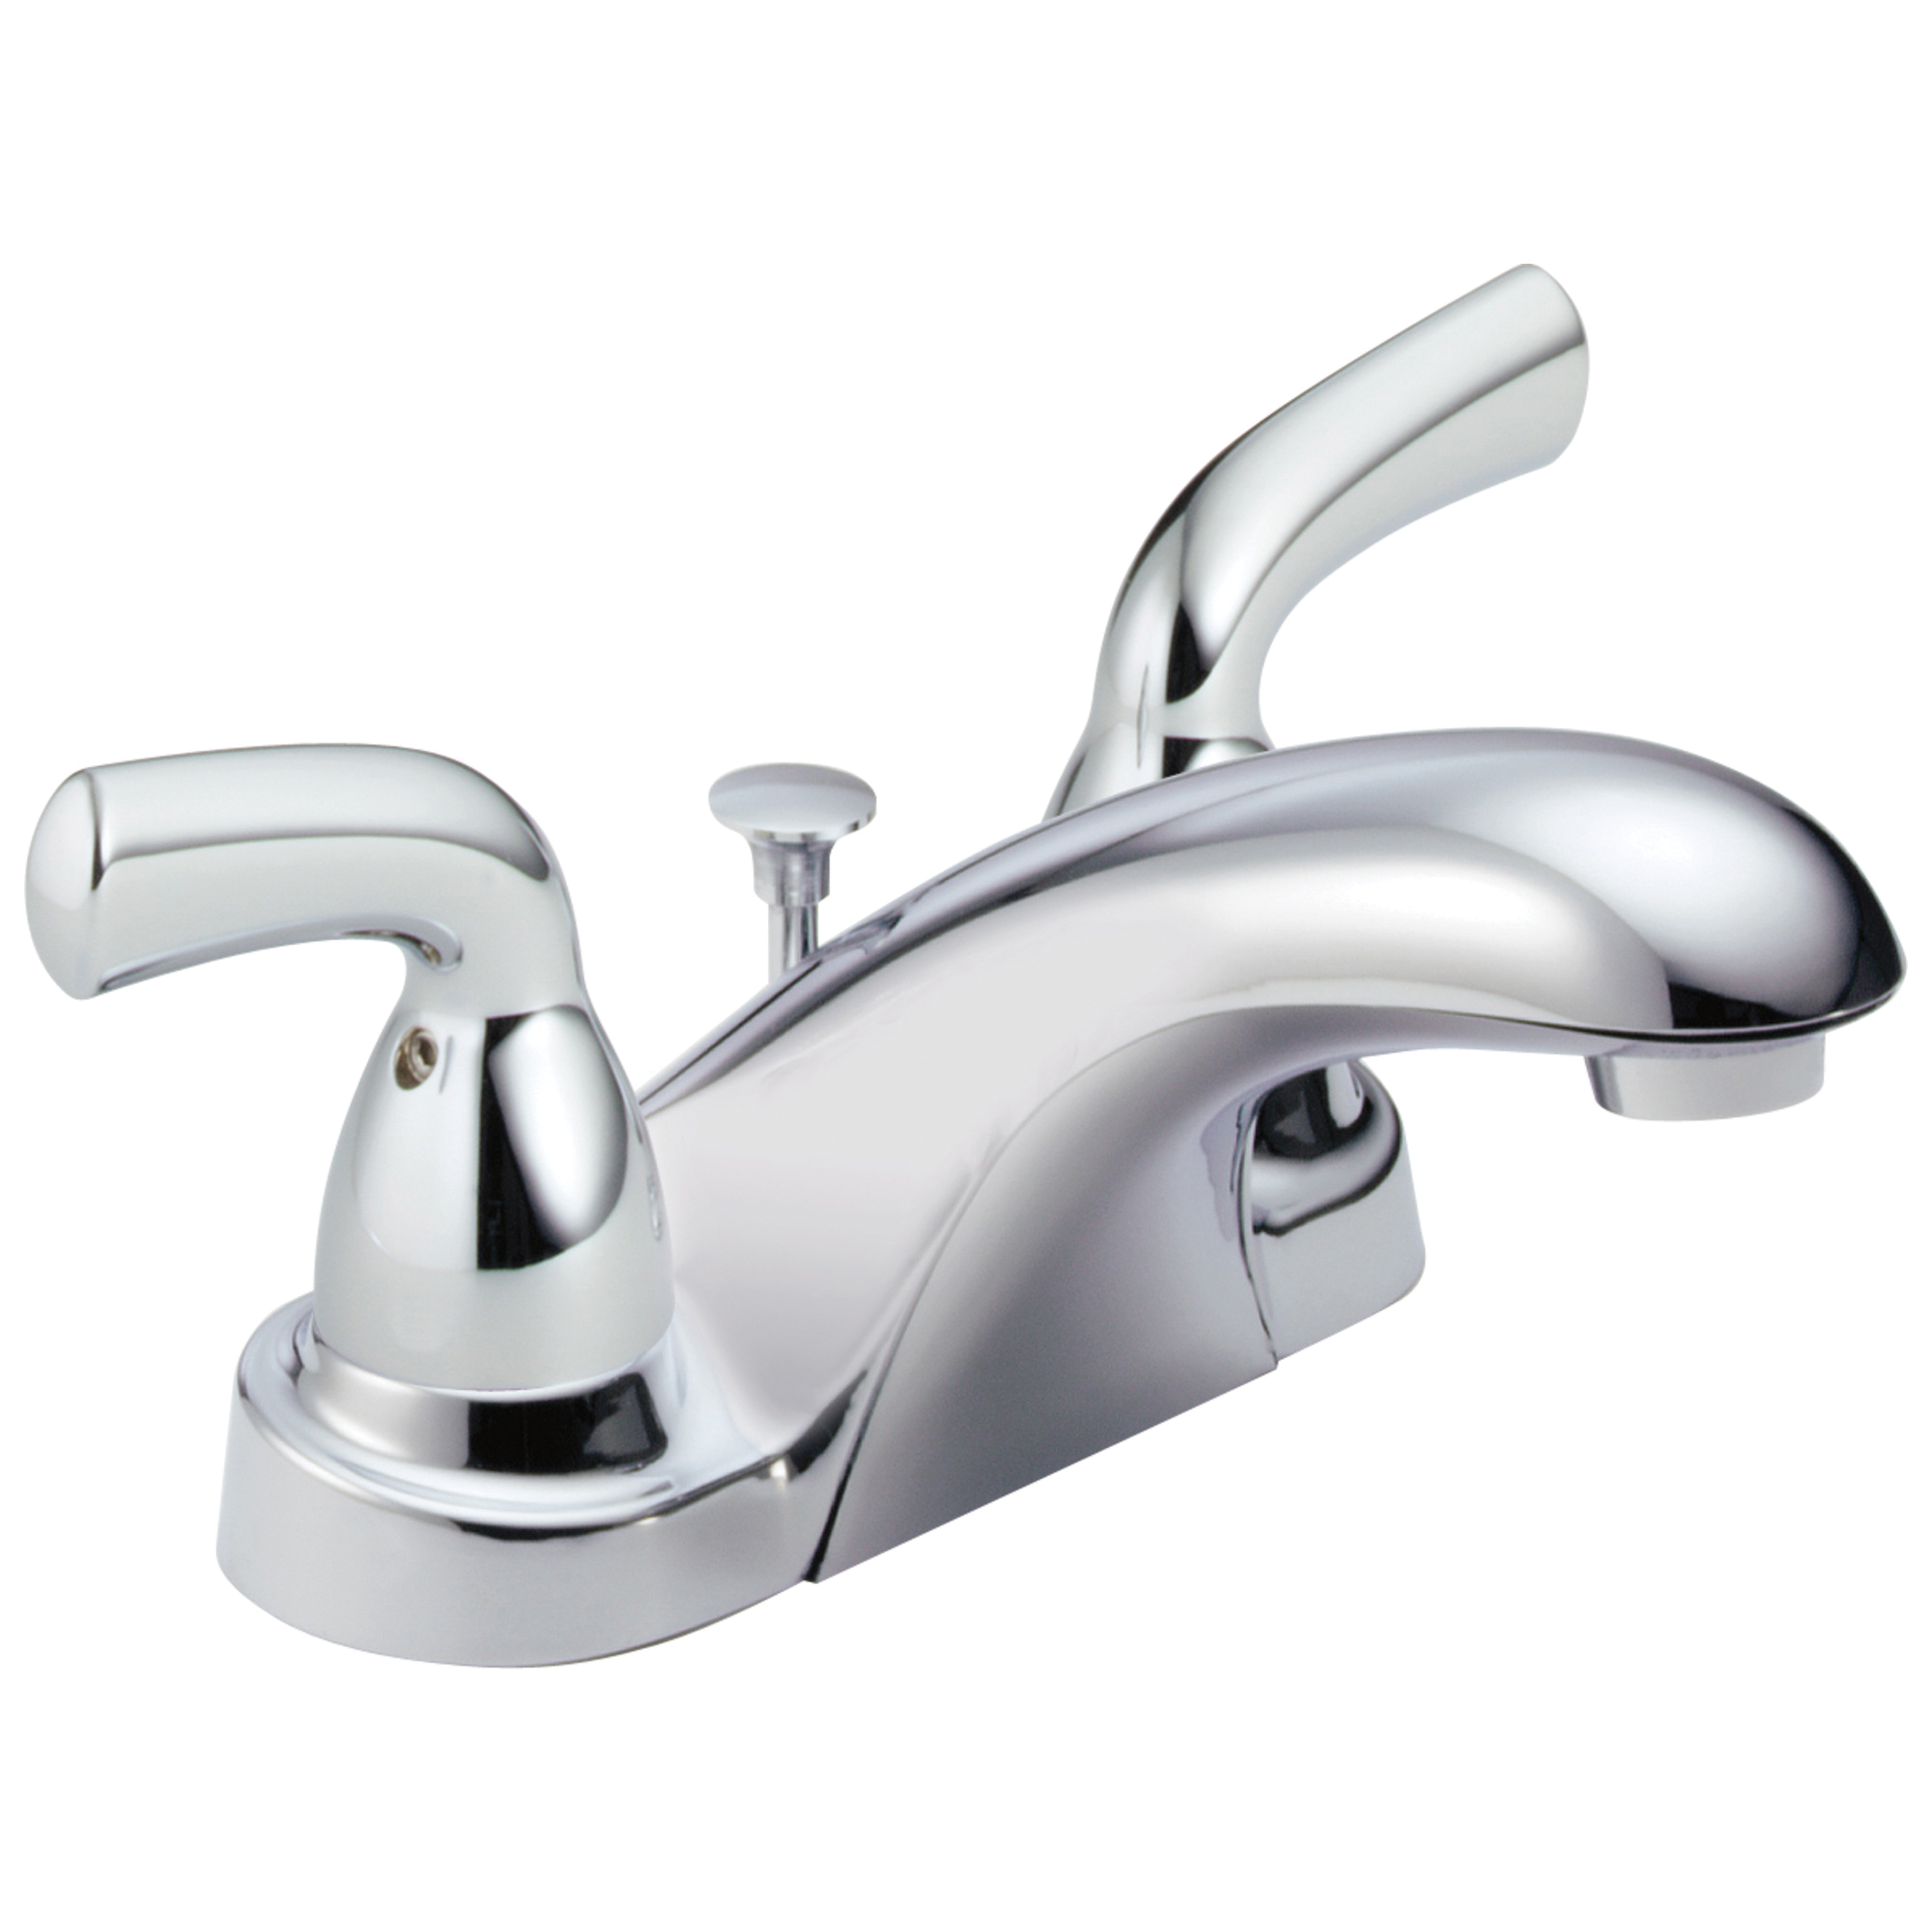 DELTA® B2510LF Centerset Lavatory Faucet, Foundations®, Chrome Plated, 2 Handles, Pop-Up Drain, 1.5 gpm